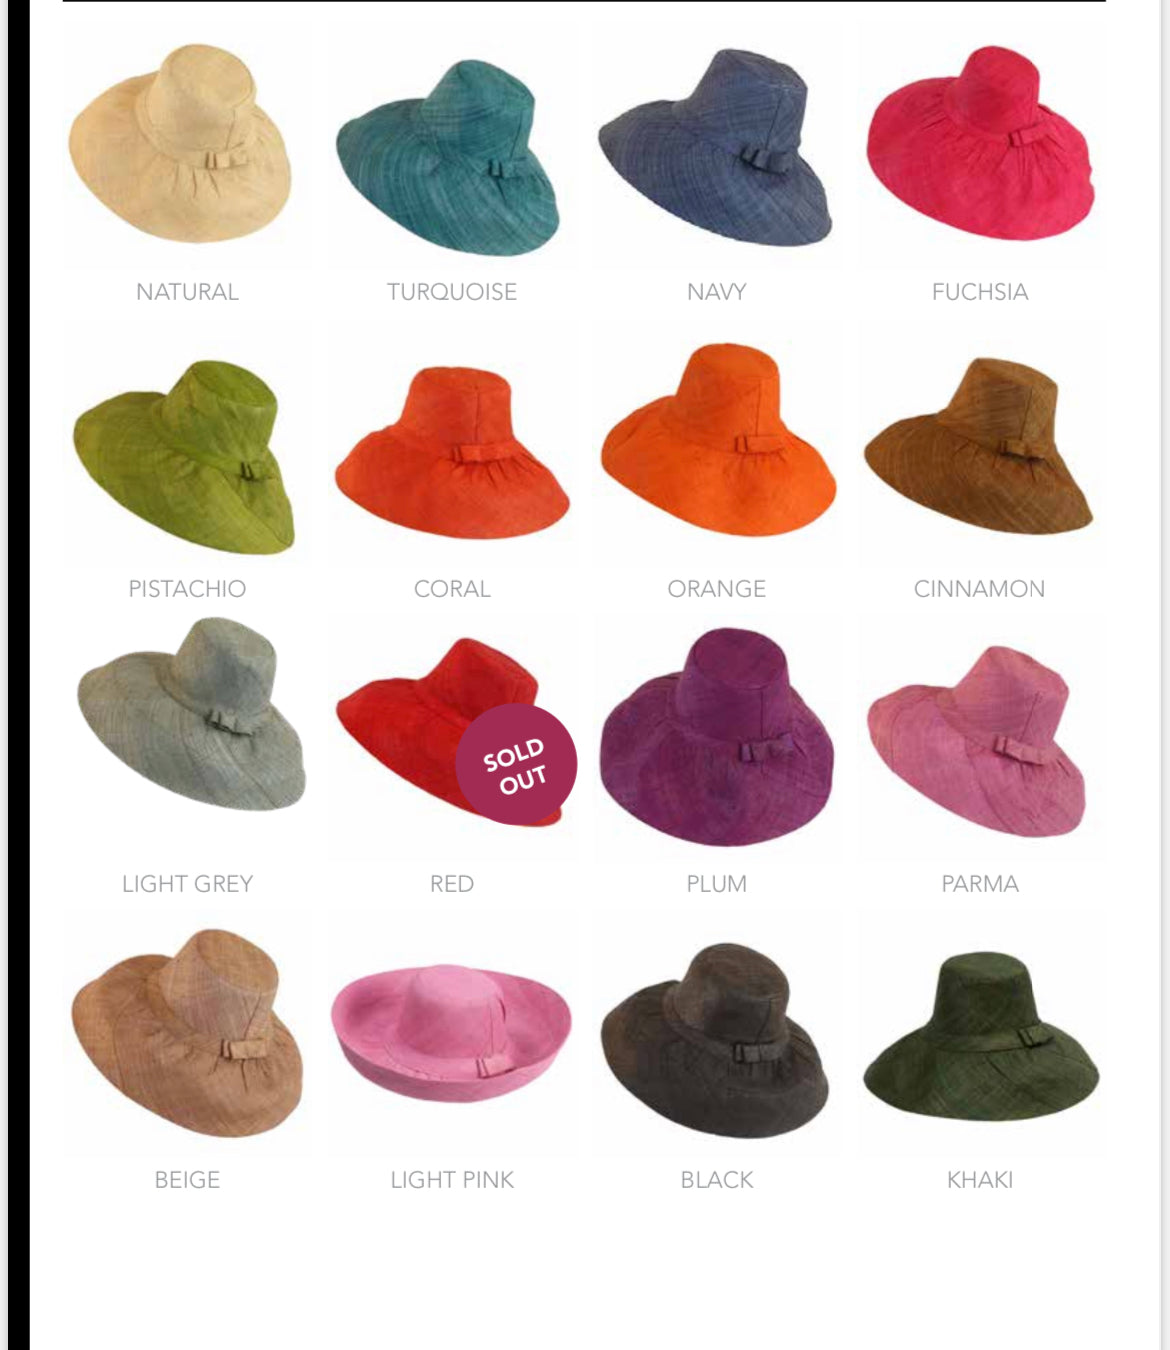 demi capeline straw hat with bow in natural, turquoise, navy, fuchsia, pistachio, coral, orange, cinnamon, light grey, plum, parma, beige light pink, black khaki